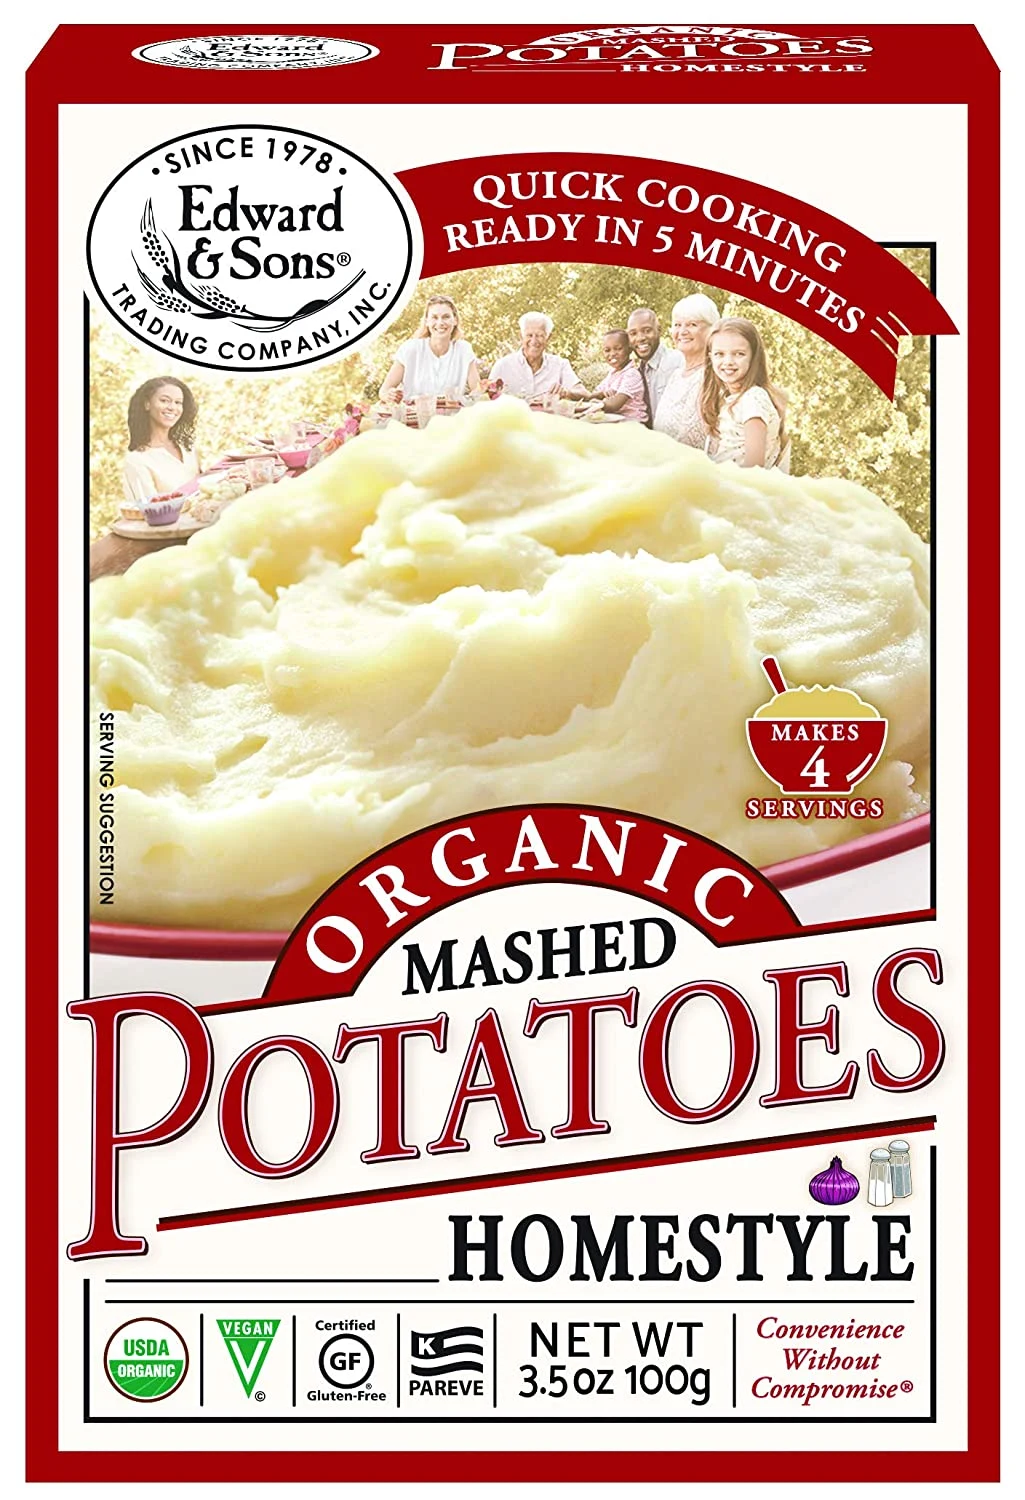 Edward & Sons Organic Mashed Potatoes Home Style